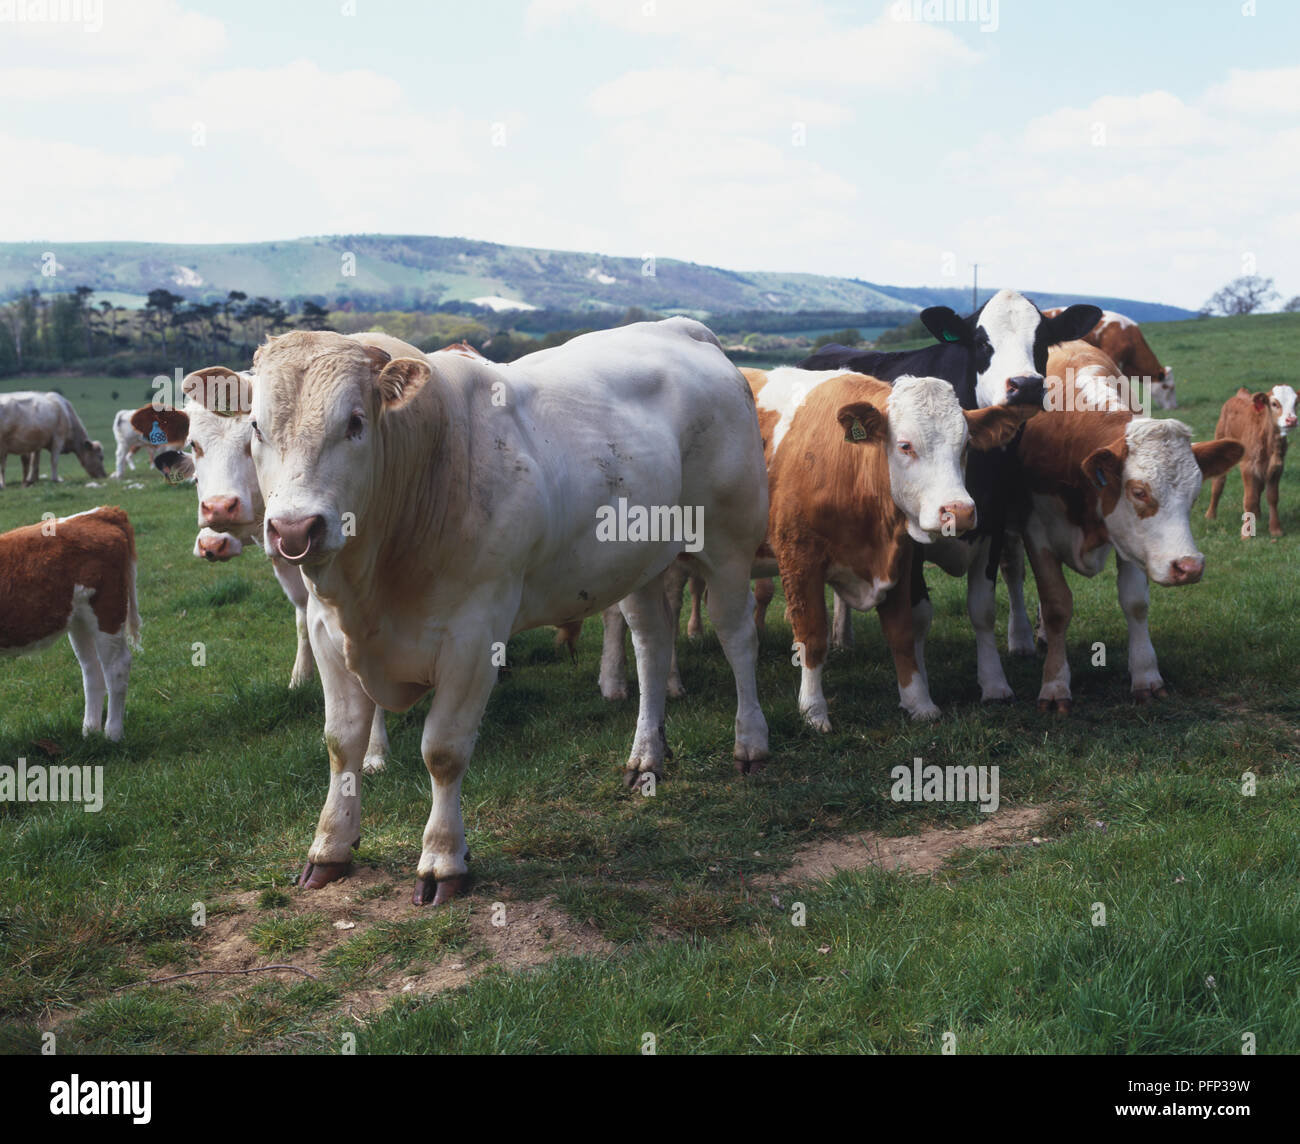 A bull (Bos taurus) amongst several cows Stock Photo